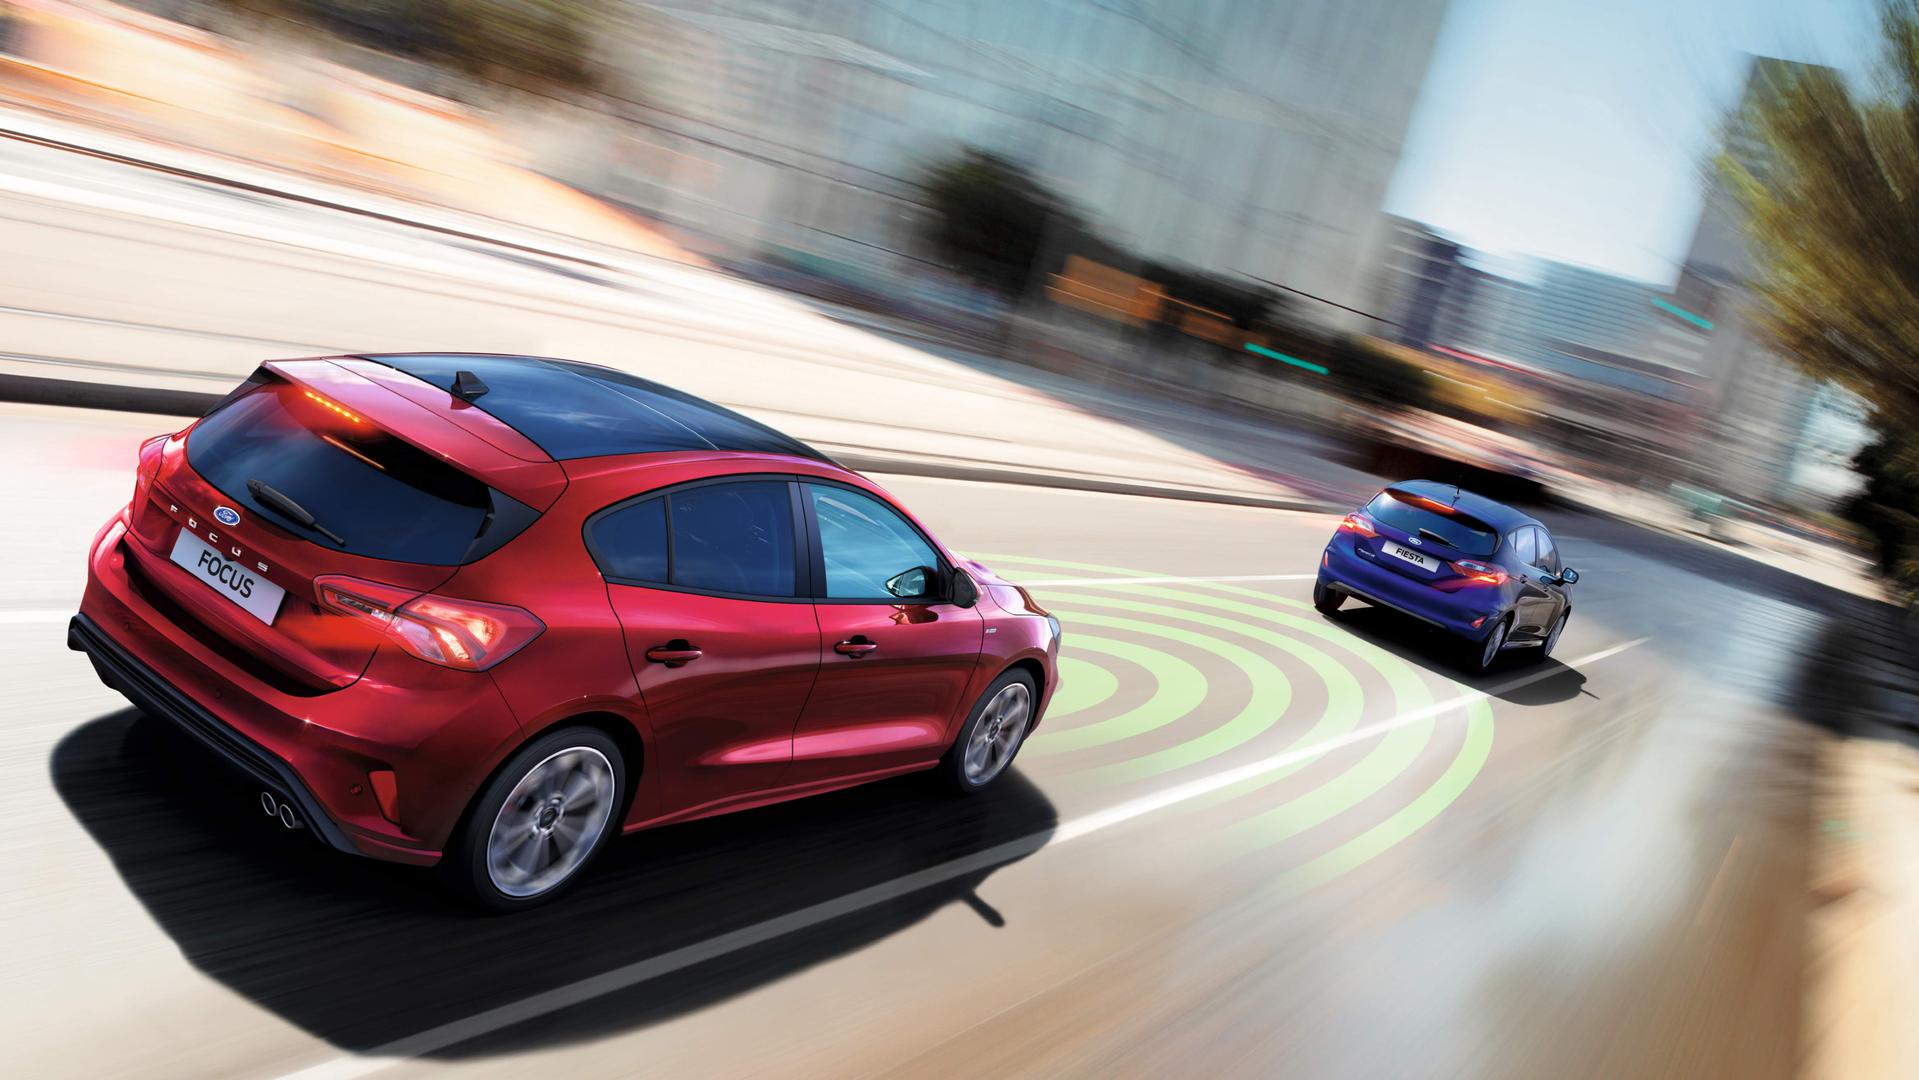 Ford Focus EuroNCAP je pohvalio adaptivni tempomat novog Ford Focusa sa Stop & Go funkcijom, prepoznavanjem ograničenja brzine i sustavom zadržavanja vozila, jer je uravnotežen i intuitivan